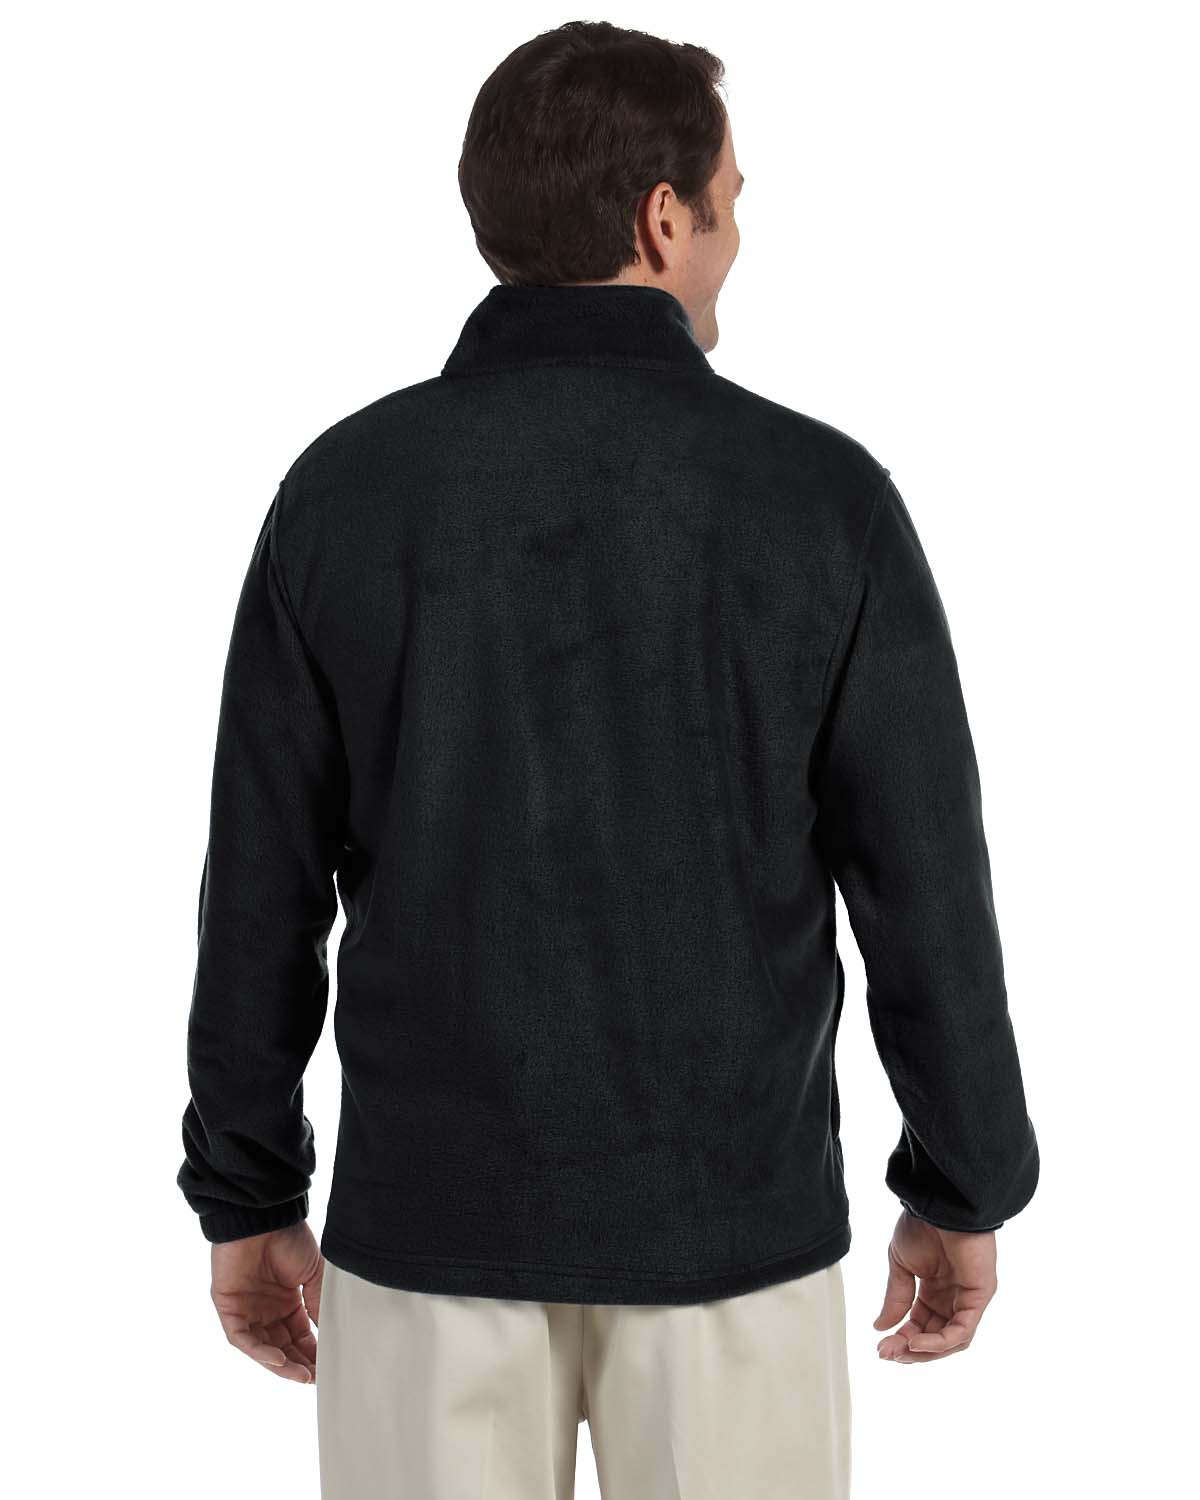 'Harriton M980 Adult Polyester Quarter Zip Fleece Pullover'